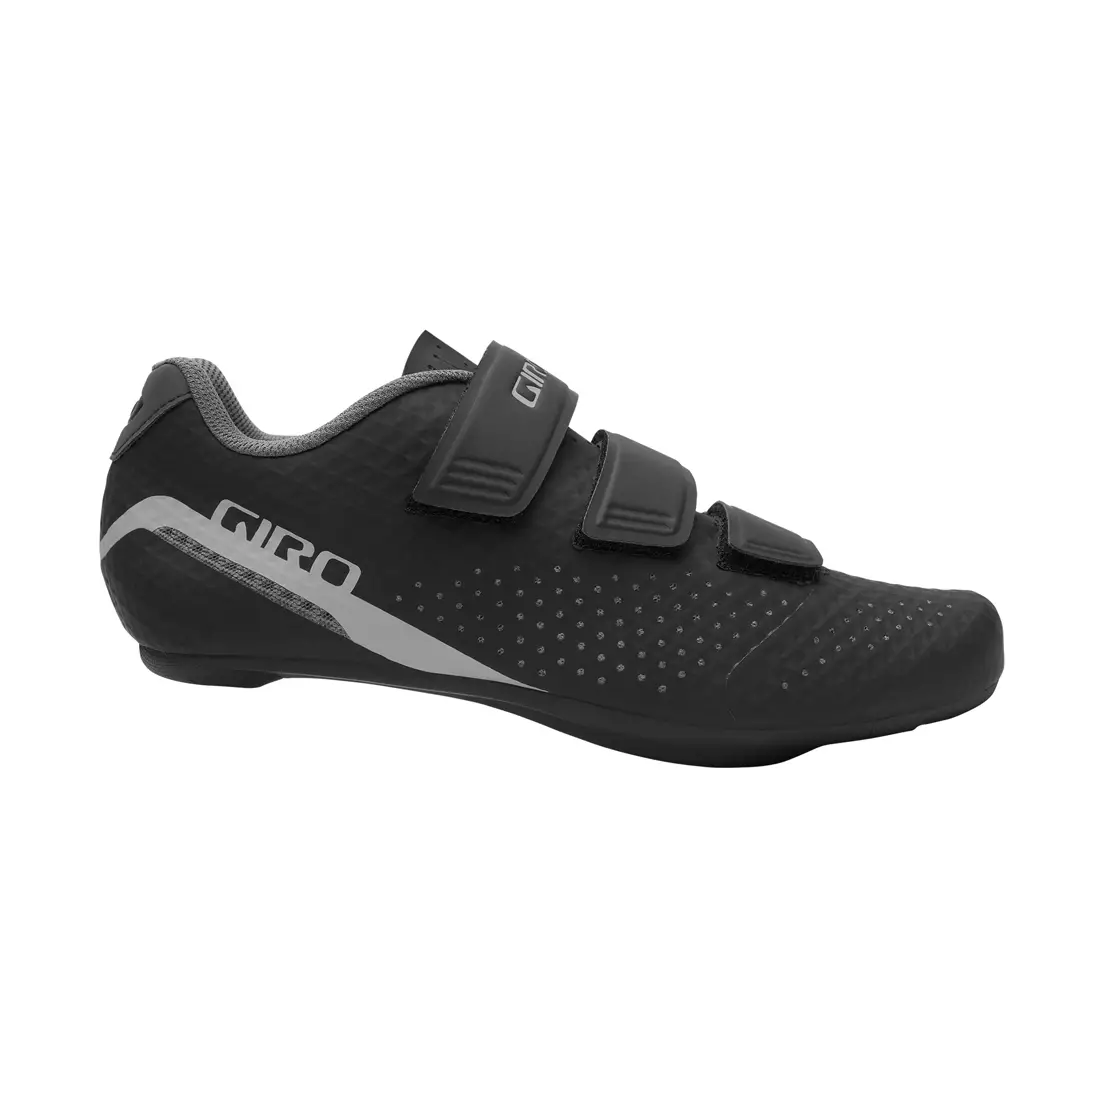 GIRO női kerékpáros cipő STYLUS W black